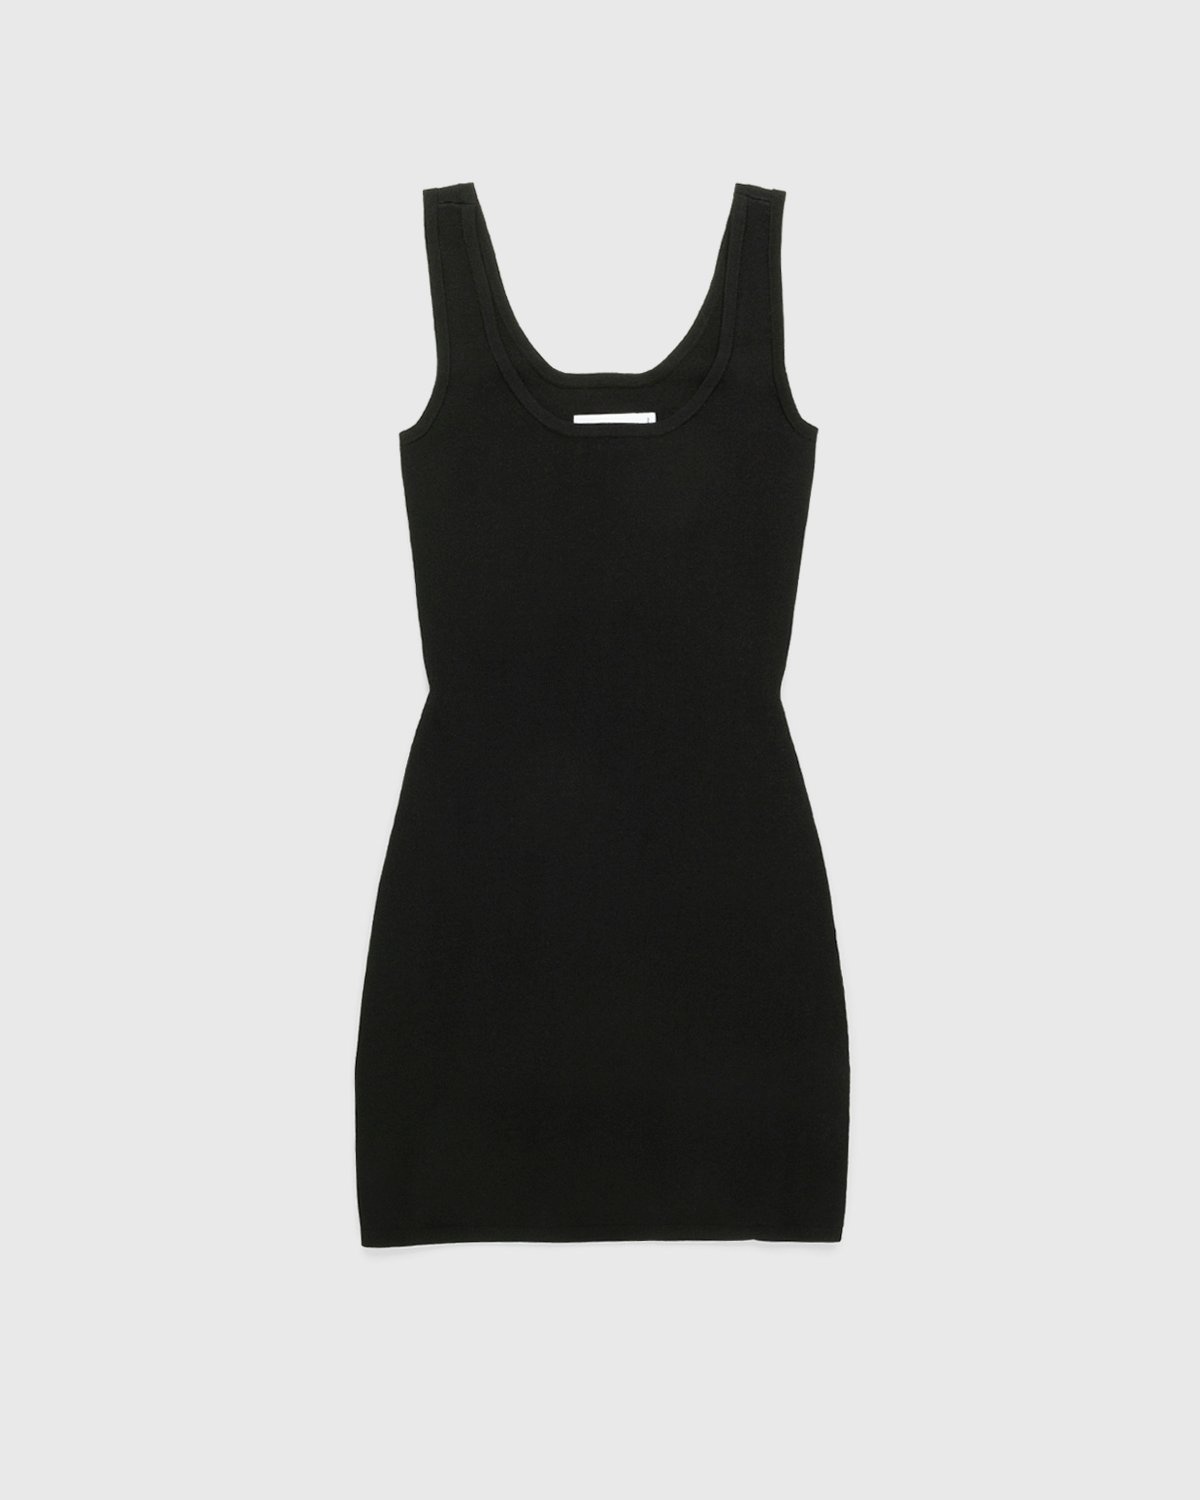 Heron Preston x Calvin Klein – Womens Tank Dress Black | Highsnobiety Shop